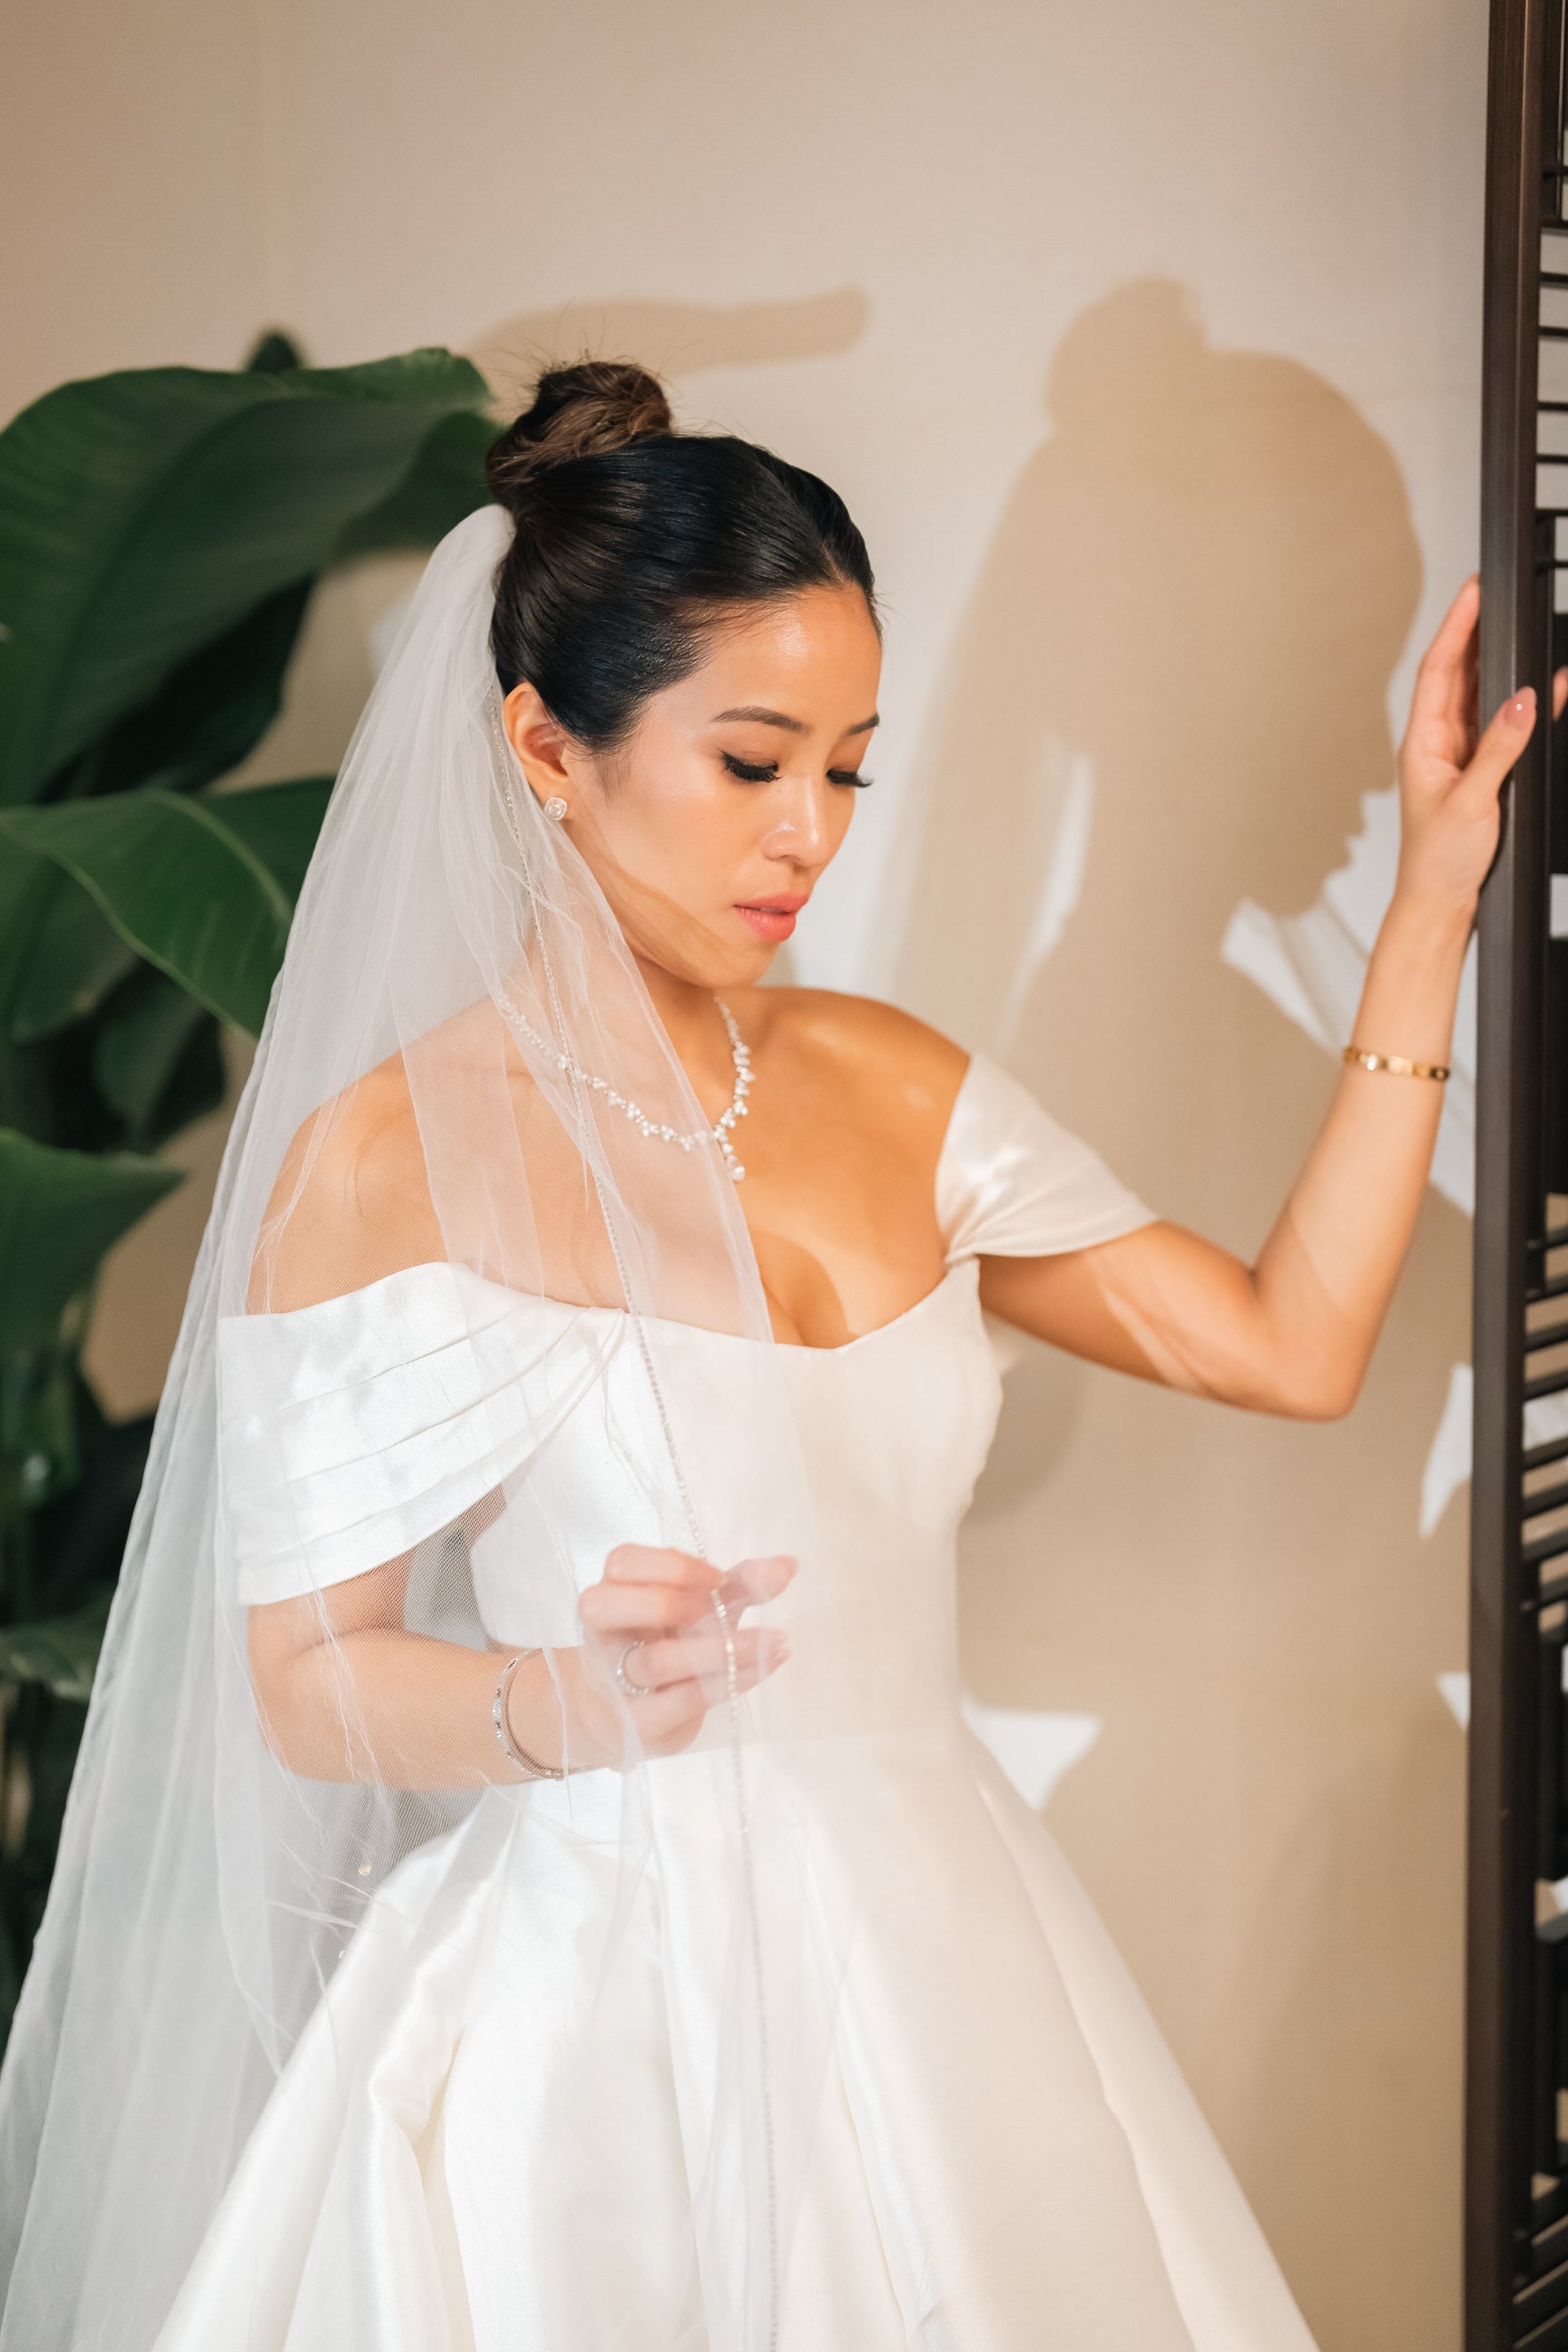 white rhinestone trim wedding veil on beautiful bride in satin ballgown